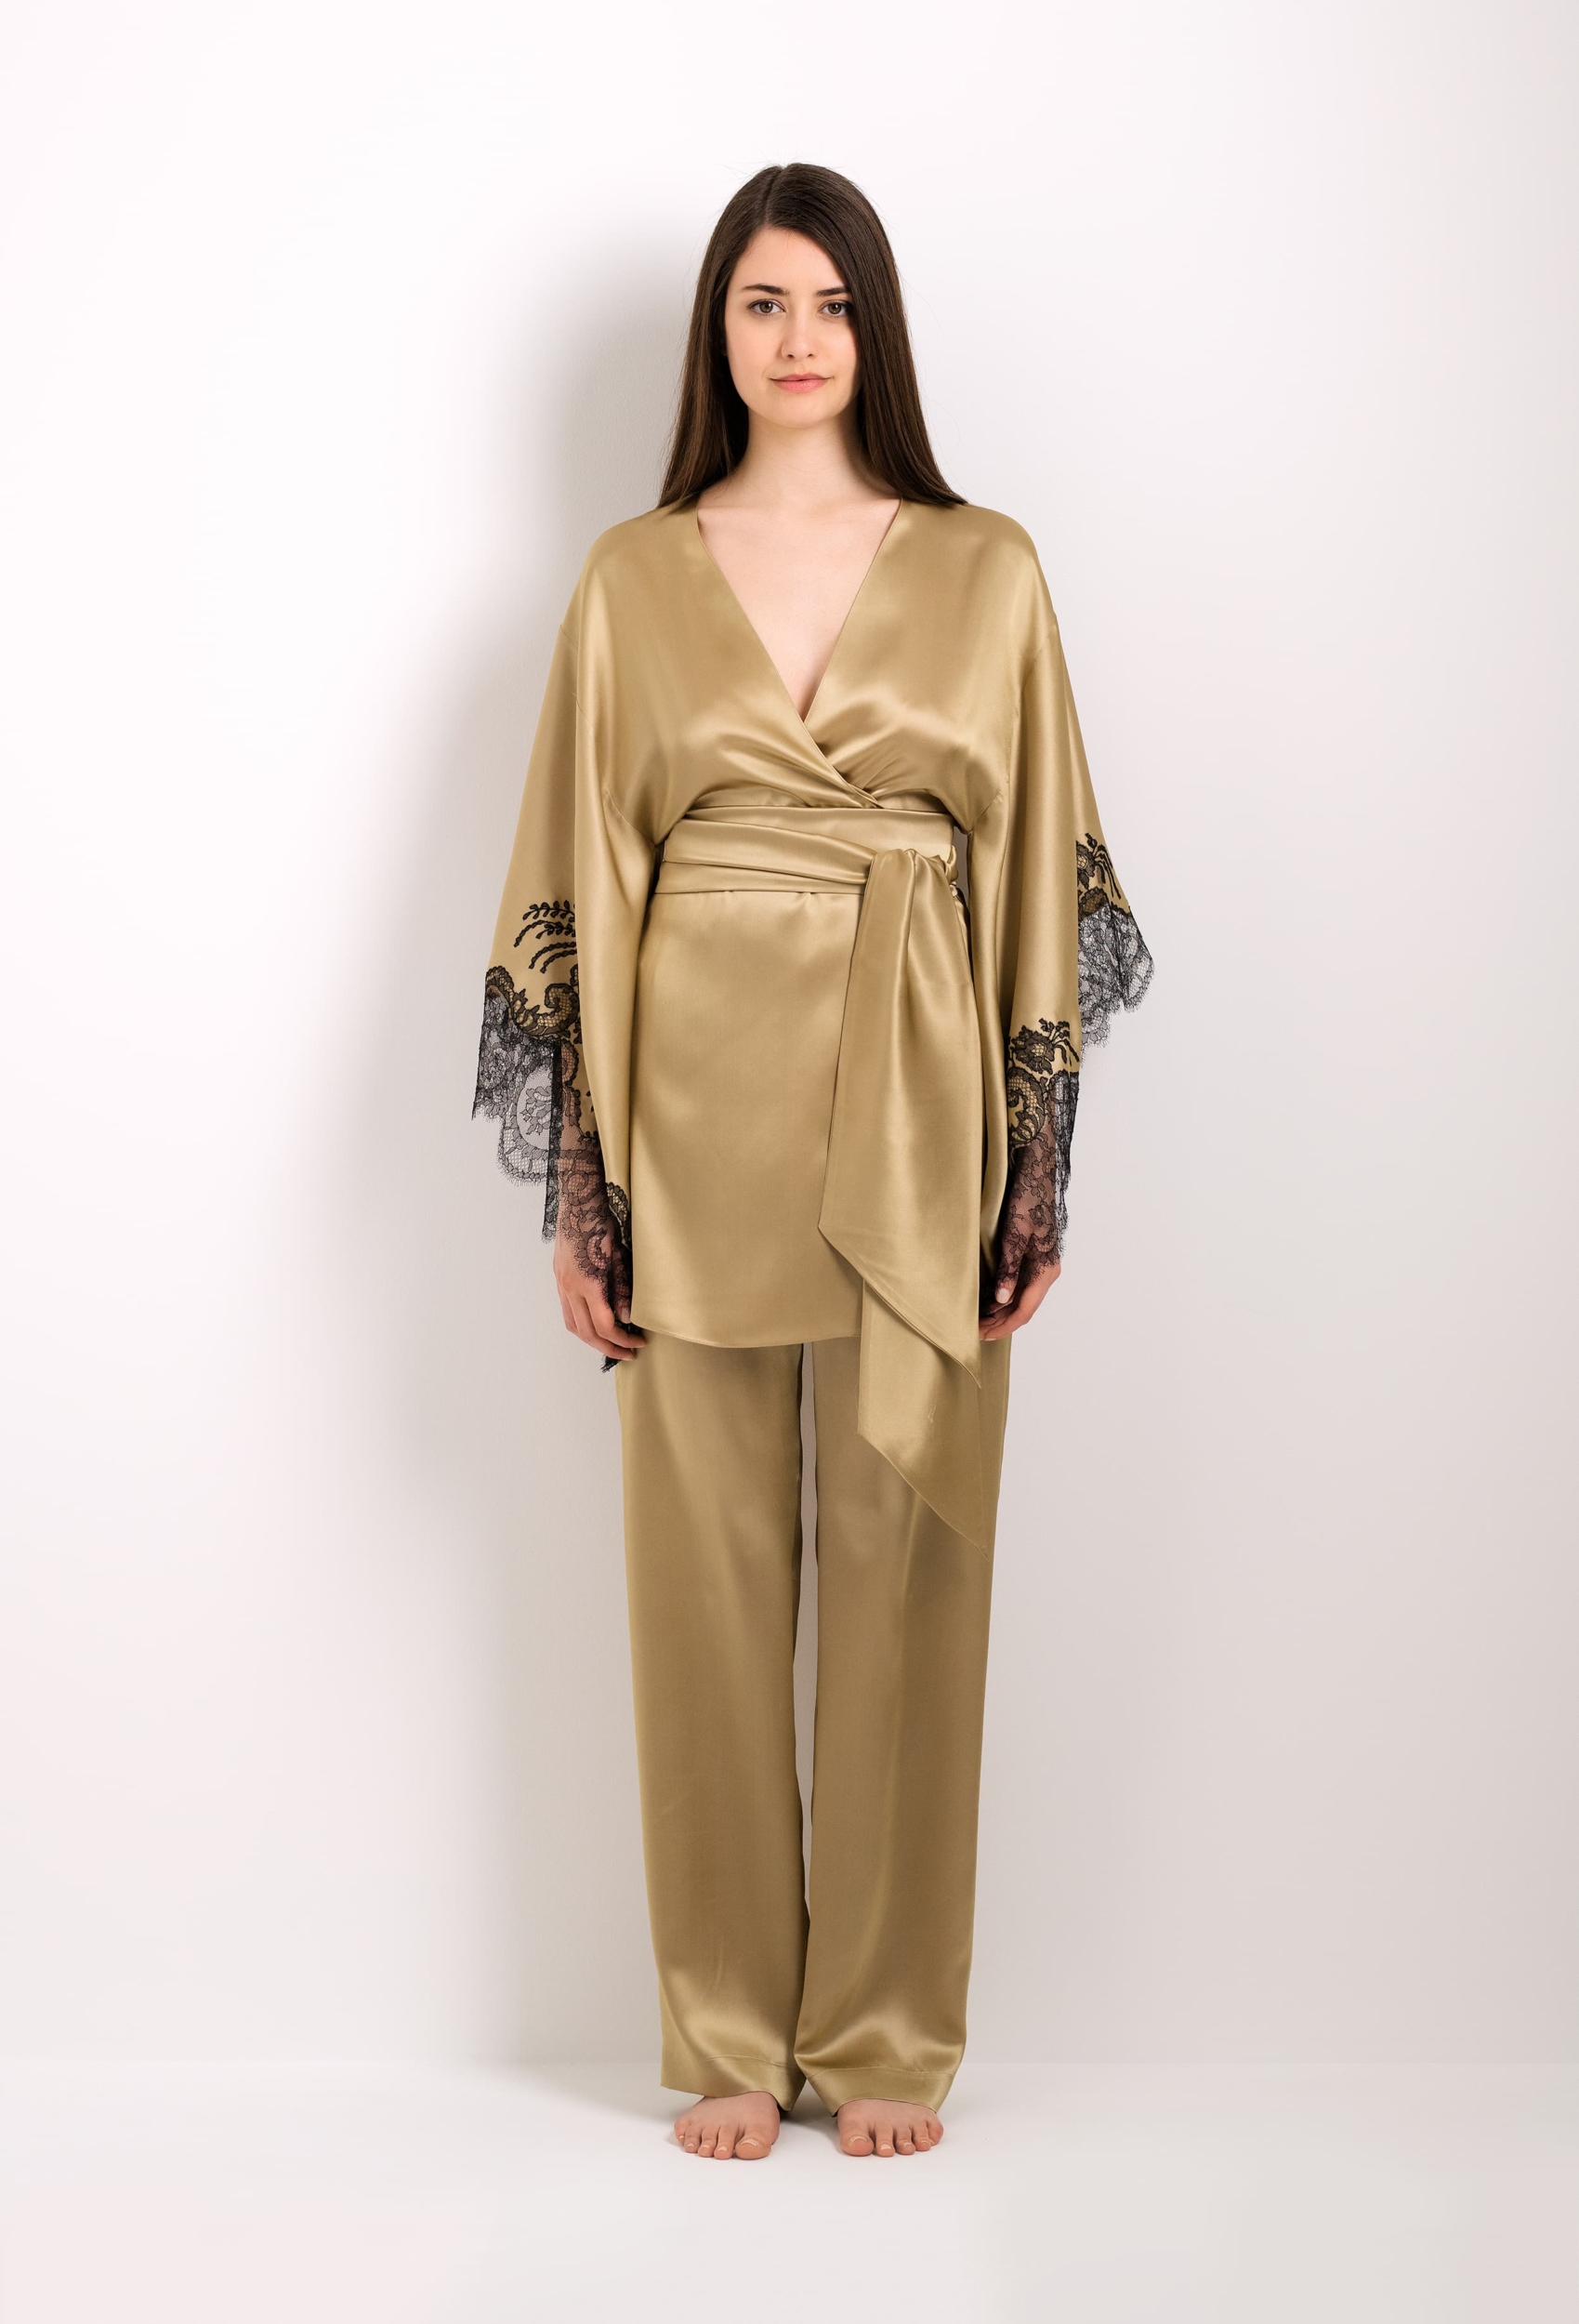 Short Carine silk Gilson and gold lace black Caudry kimono - Venise -